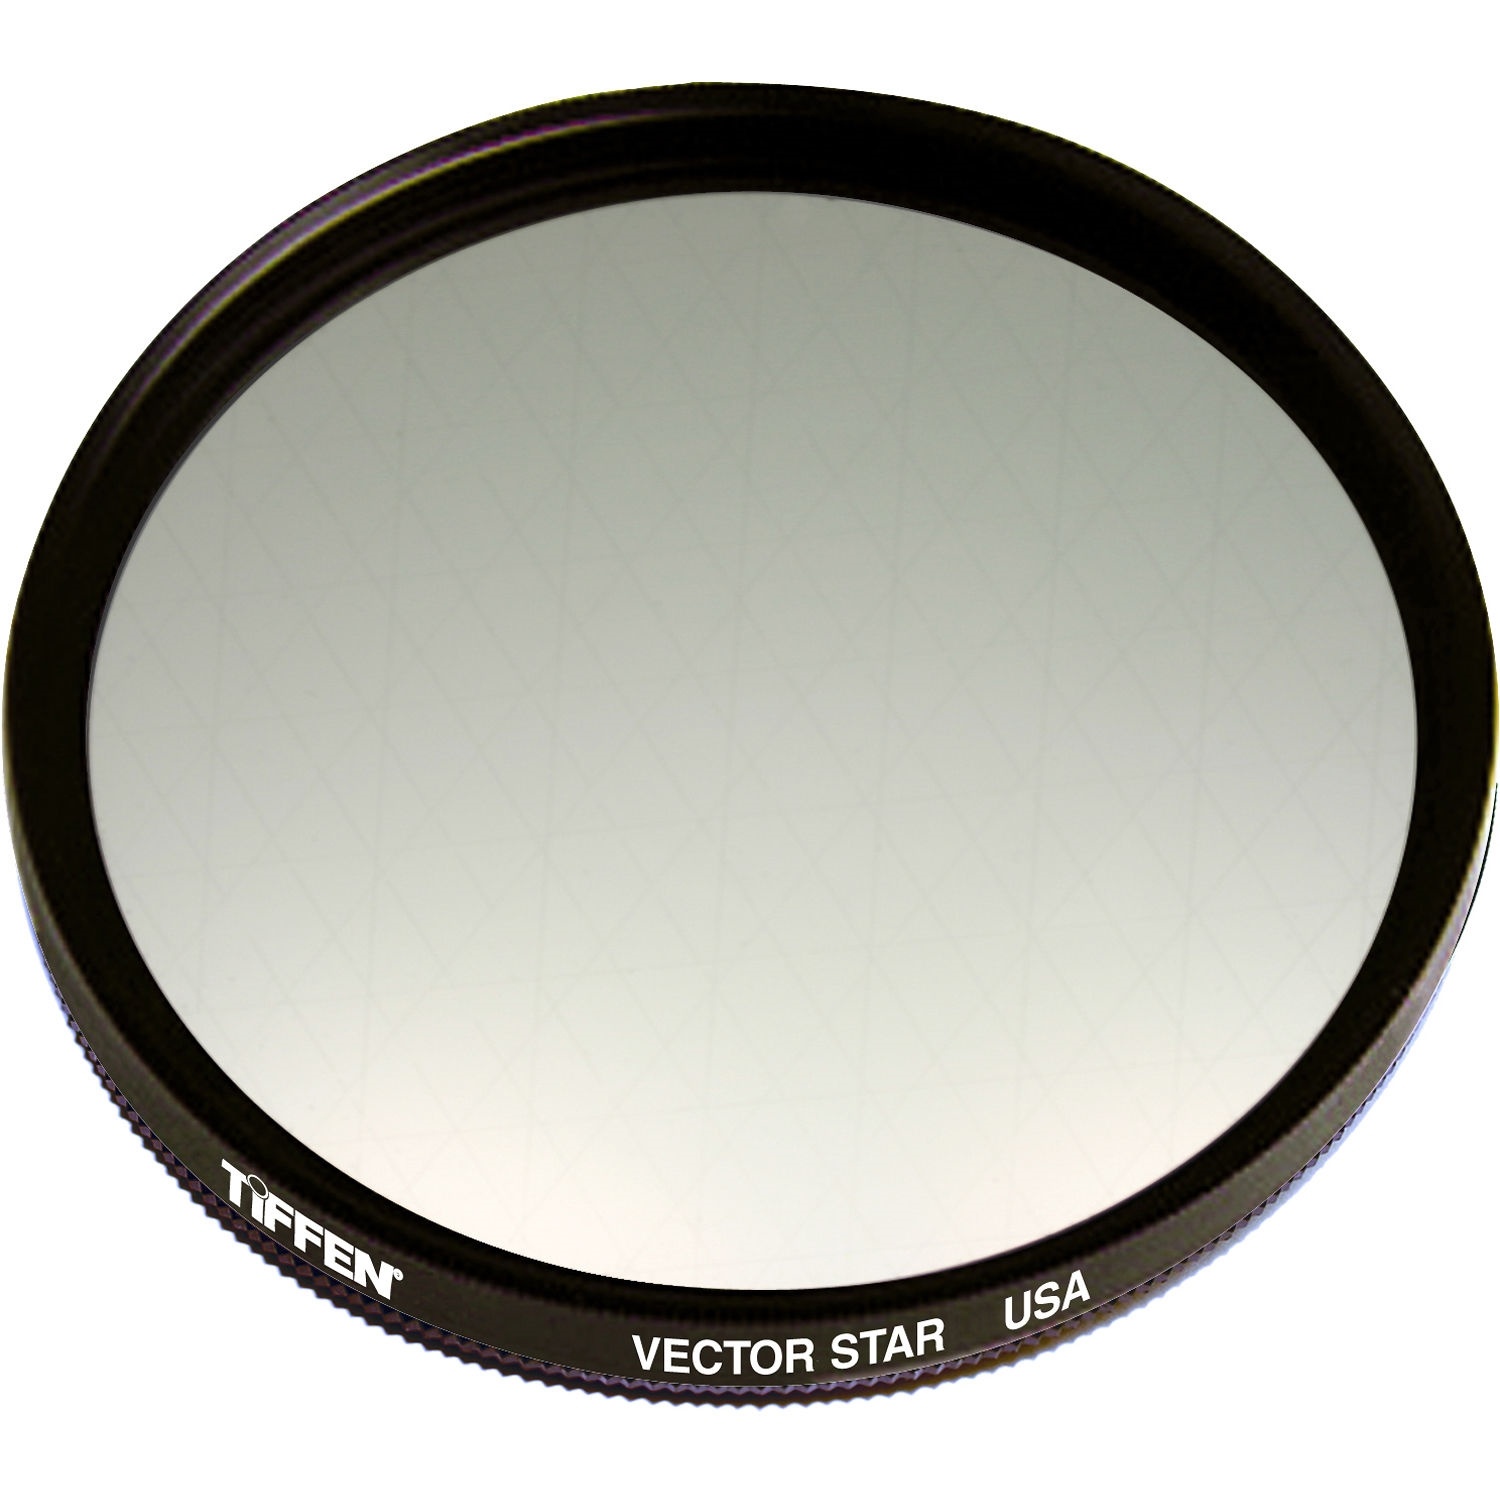 Tiffen 62mm Vector Star Effect Filter